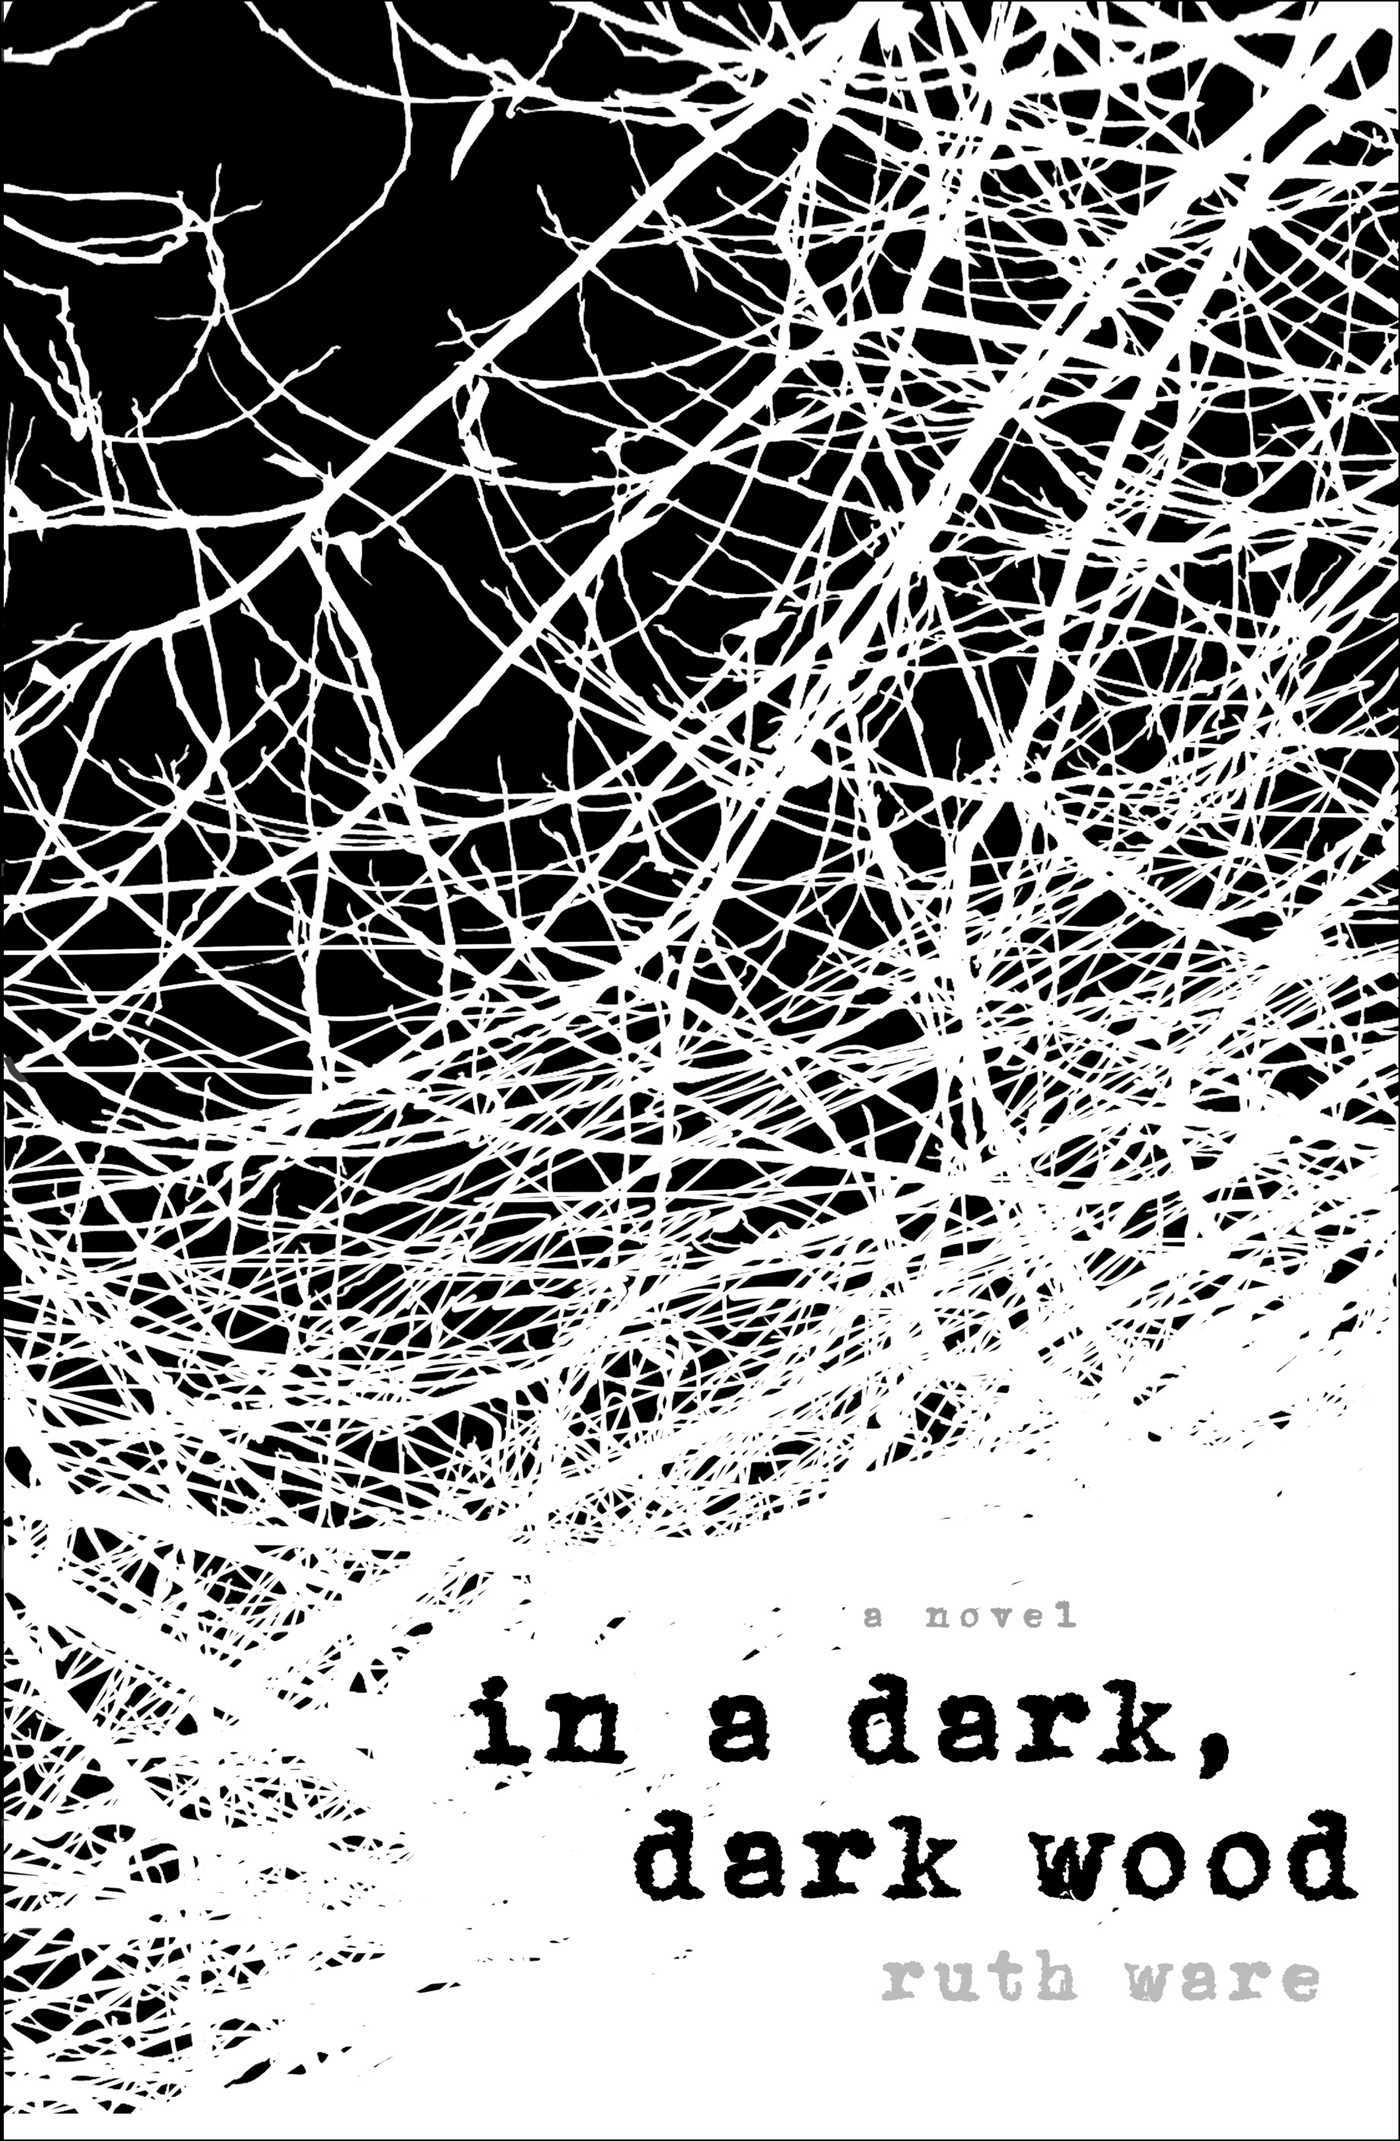 Image for "In a Dark, Dark Wood"